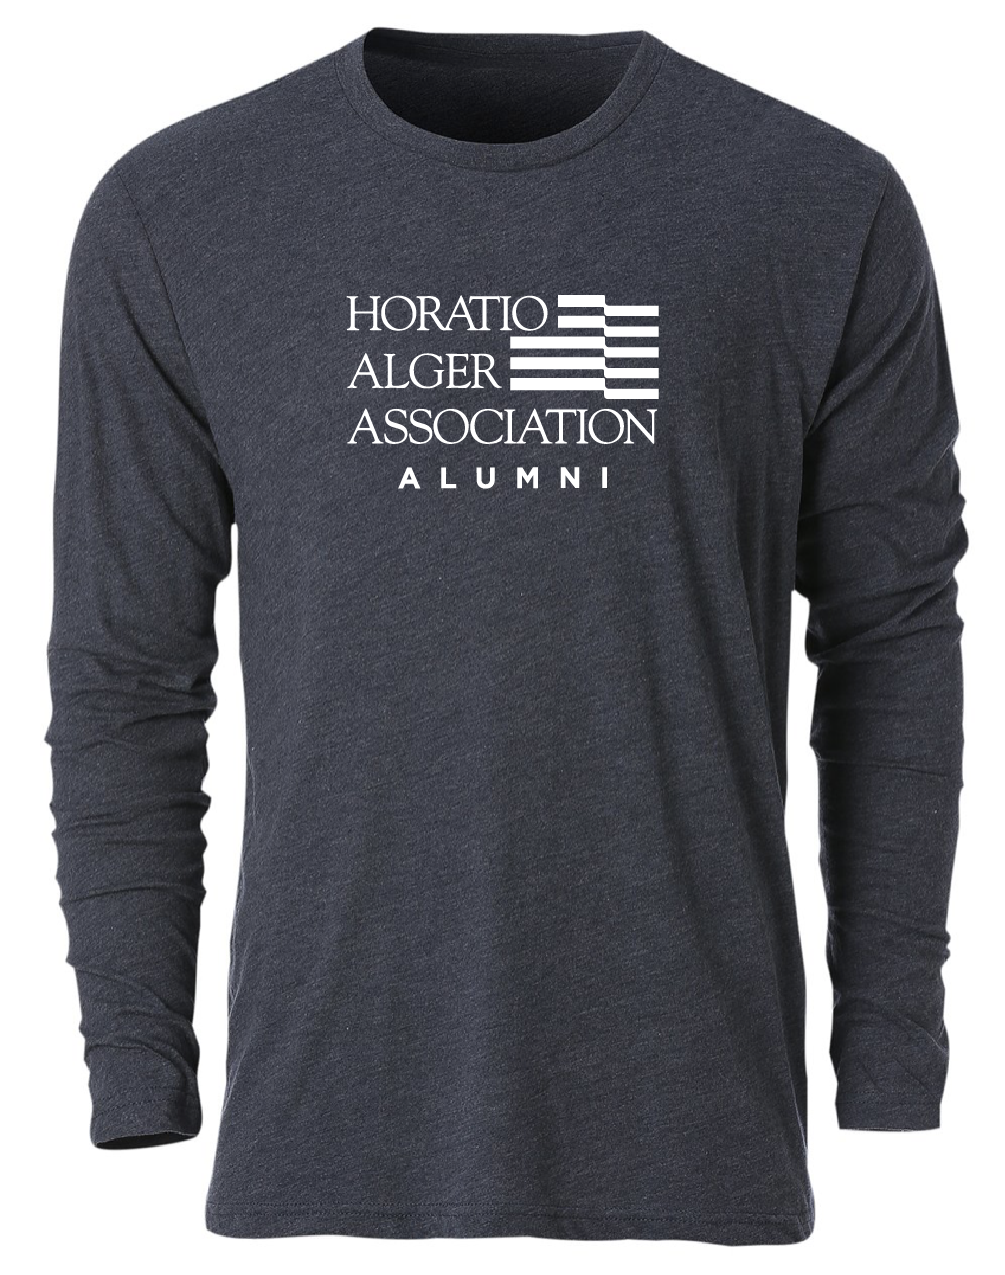 Horatio Alger Association Alumni Long Sleeve T-Shirt - Navy